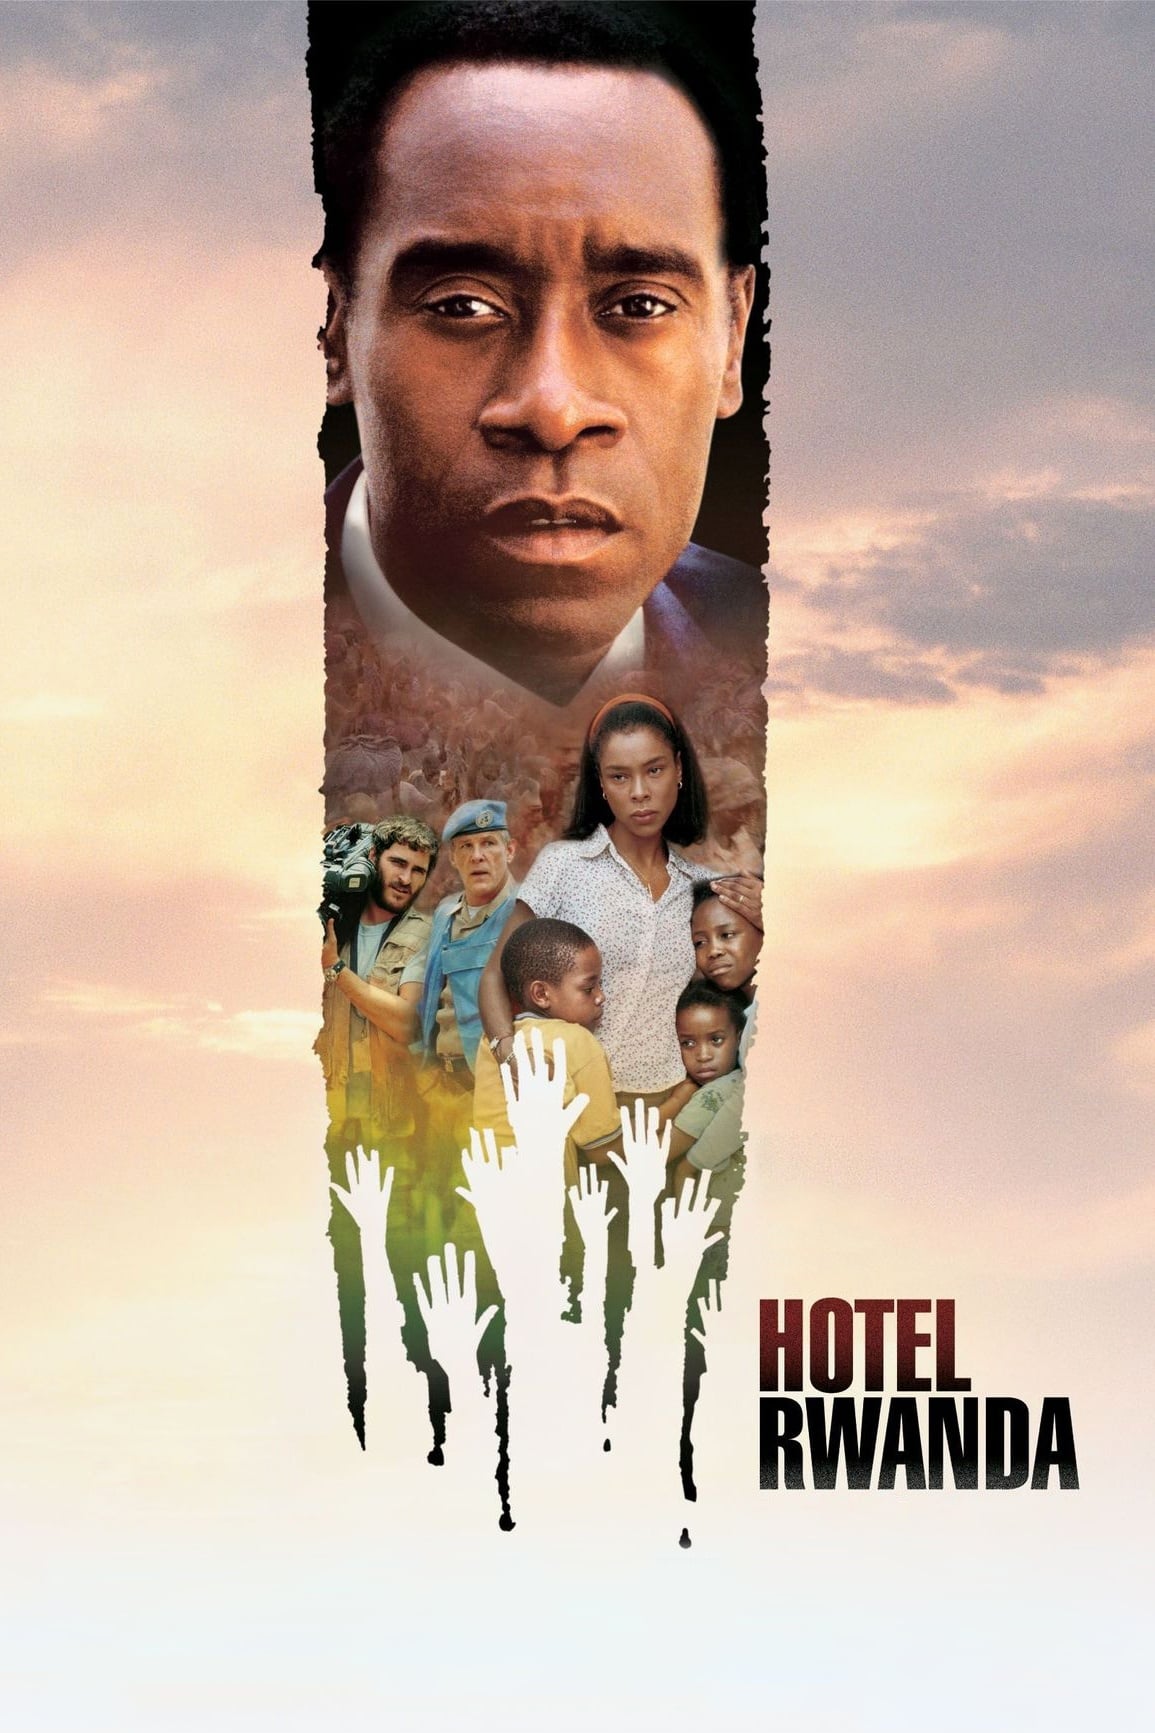 Plakat von "Hotel Rwanda"